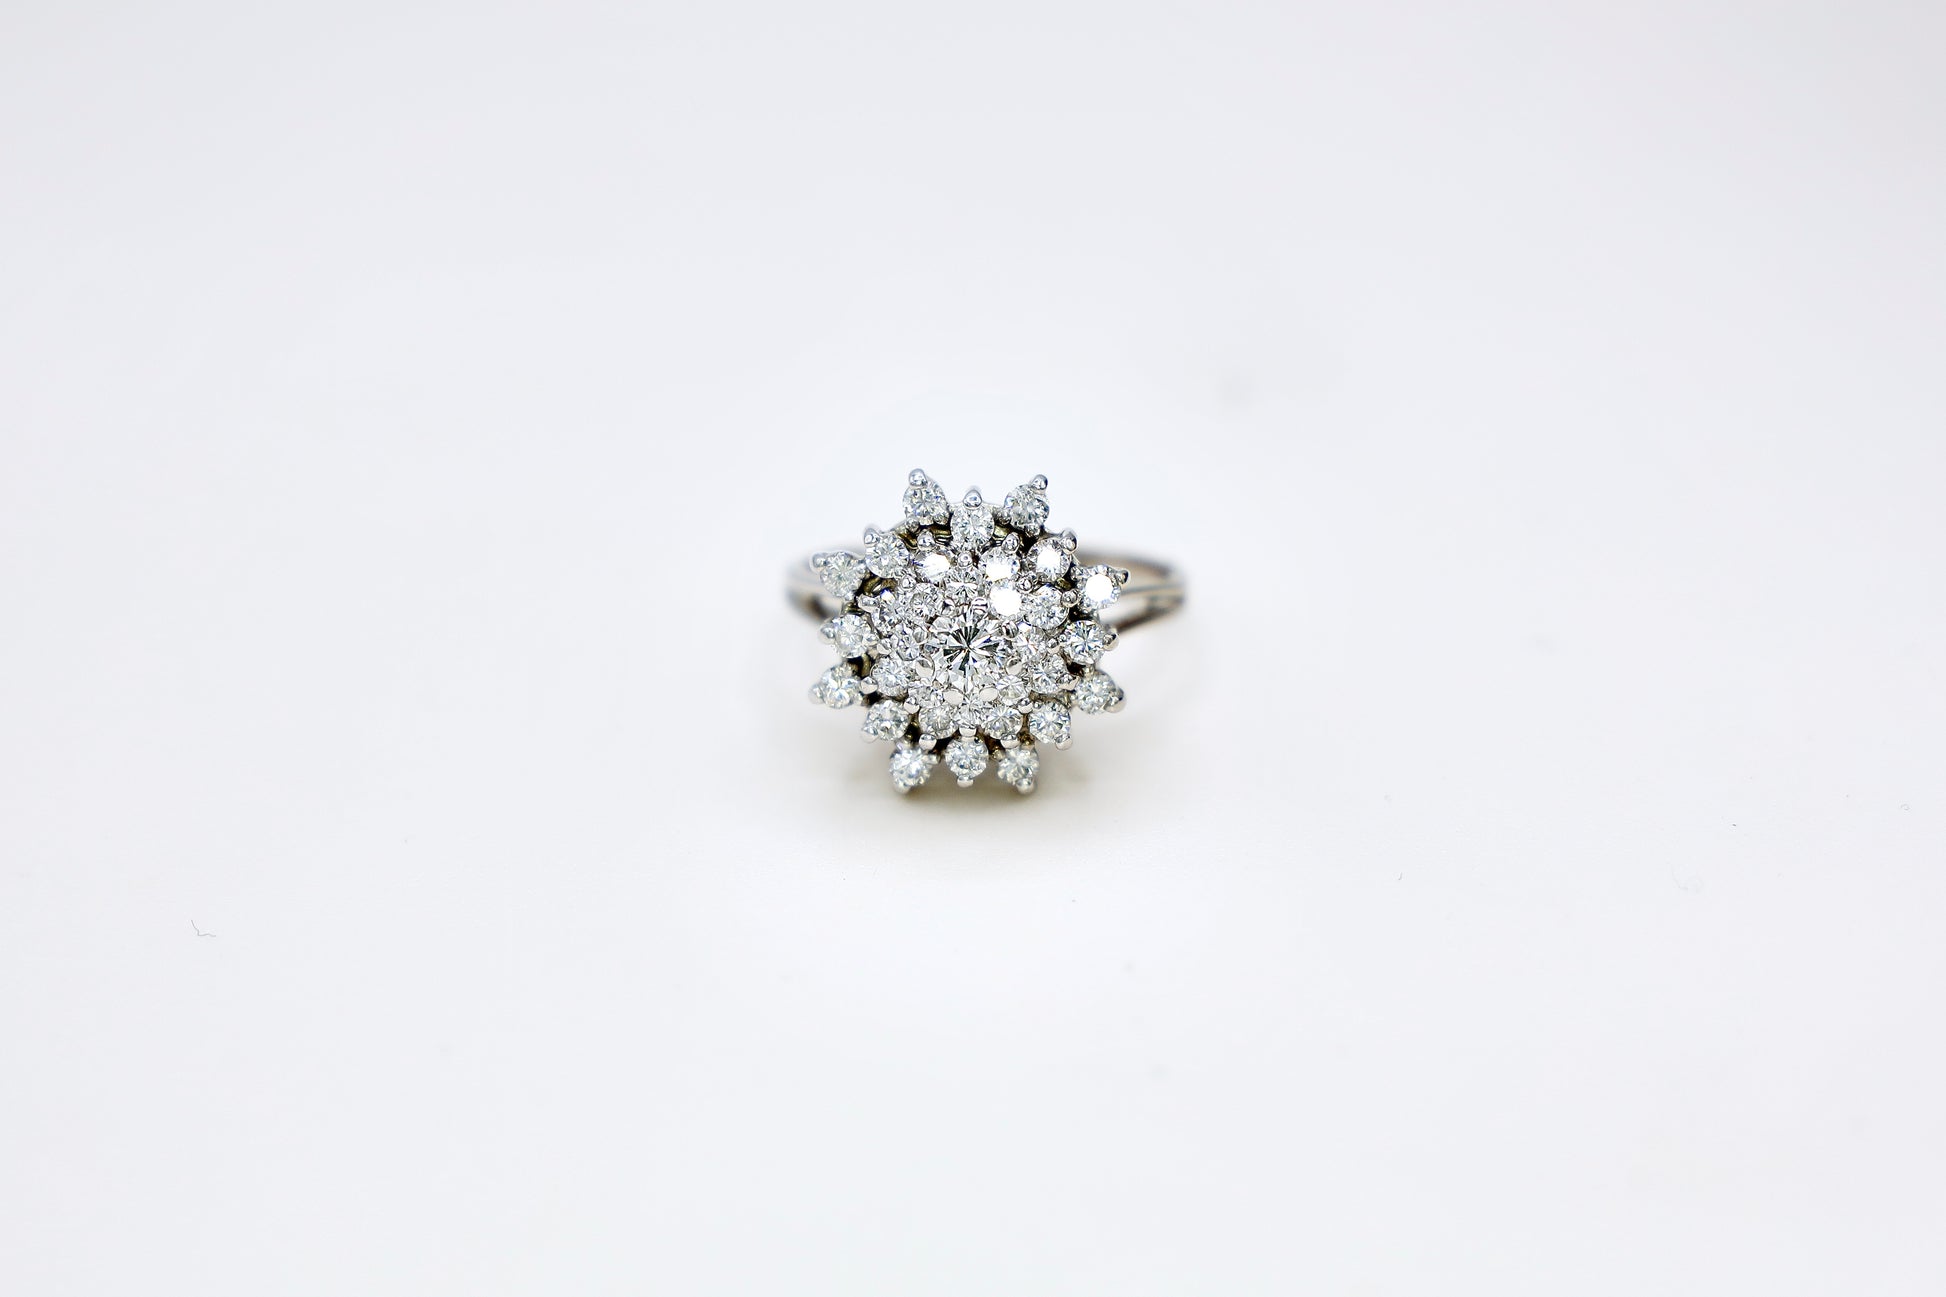 10K White Gold Diamond Fashion Ring Size 9.75 5.7Dwt